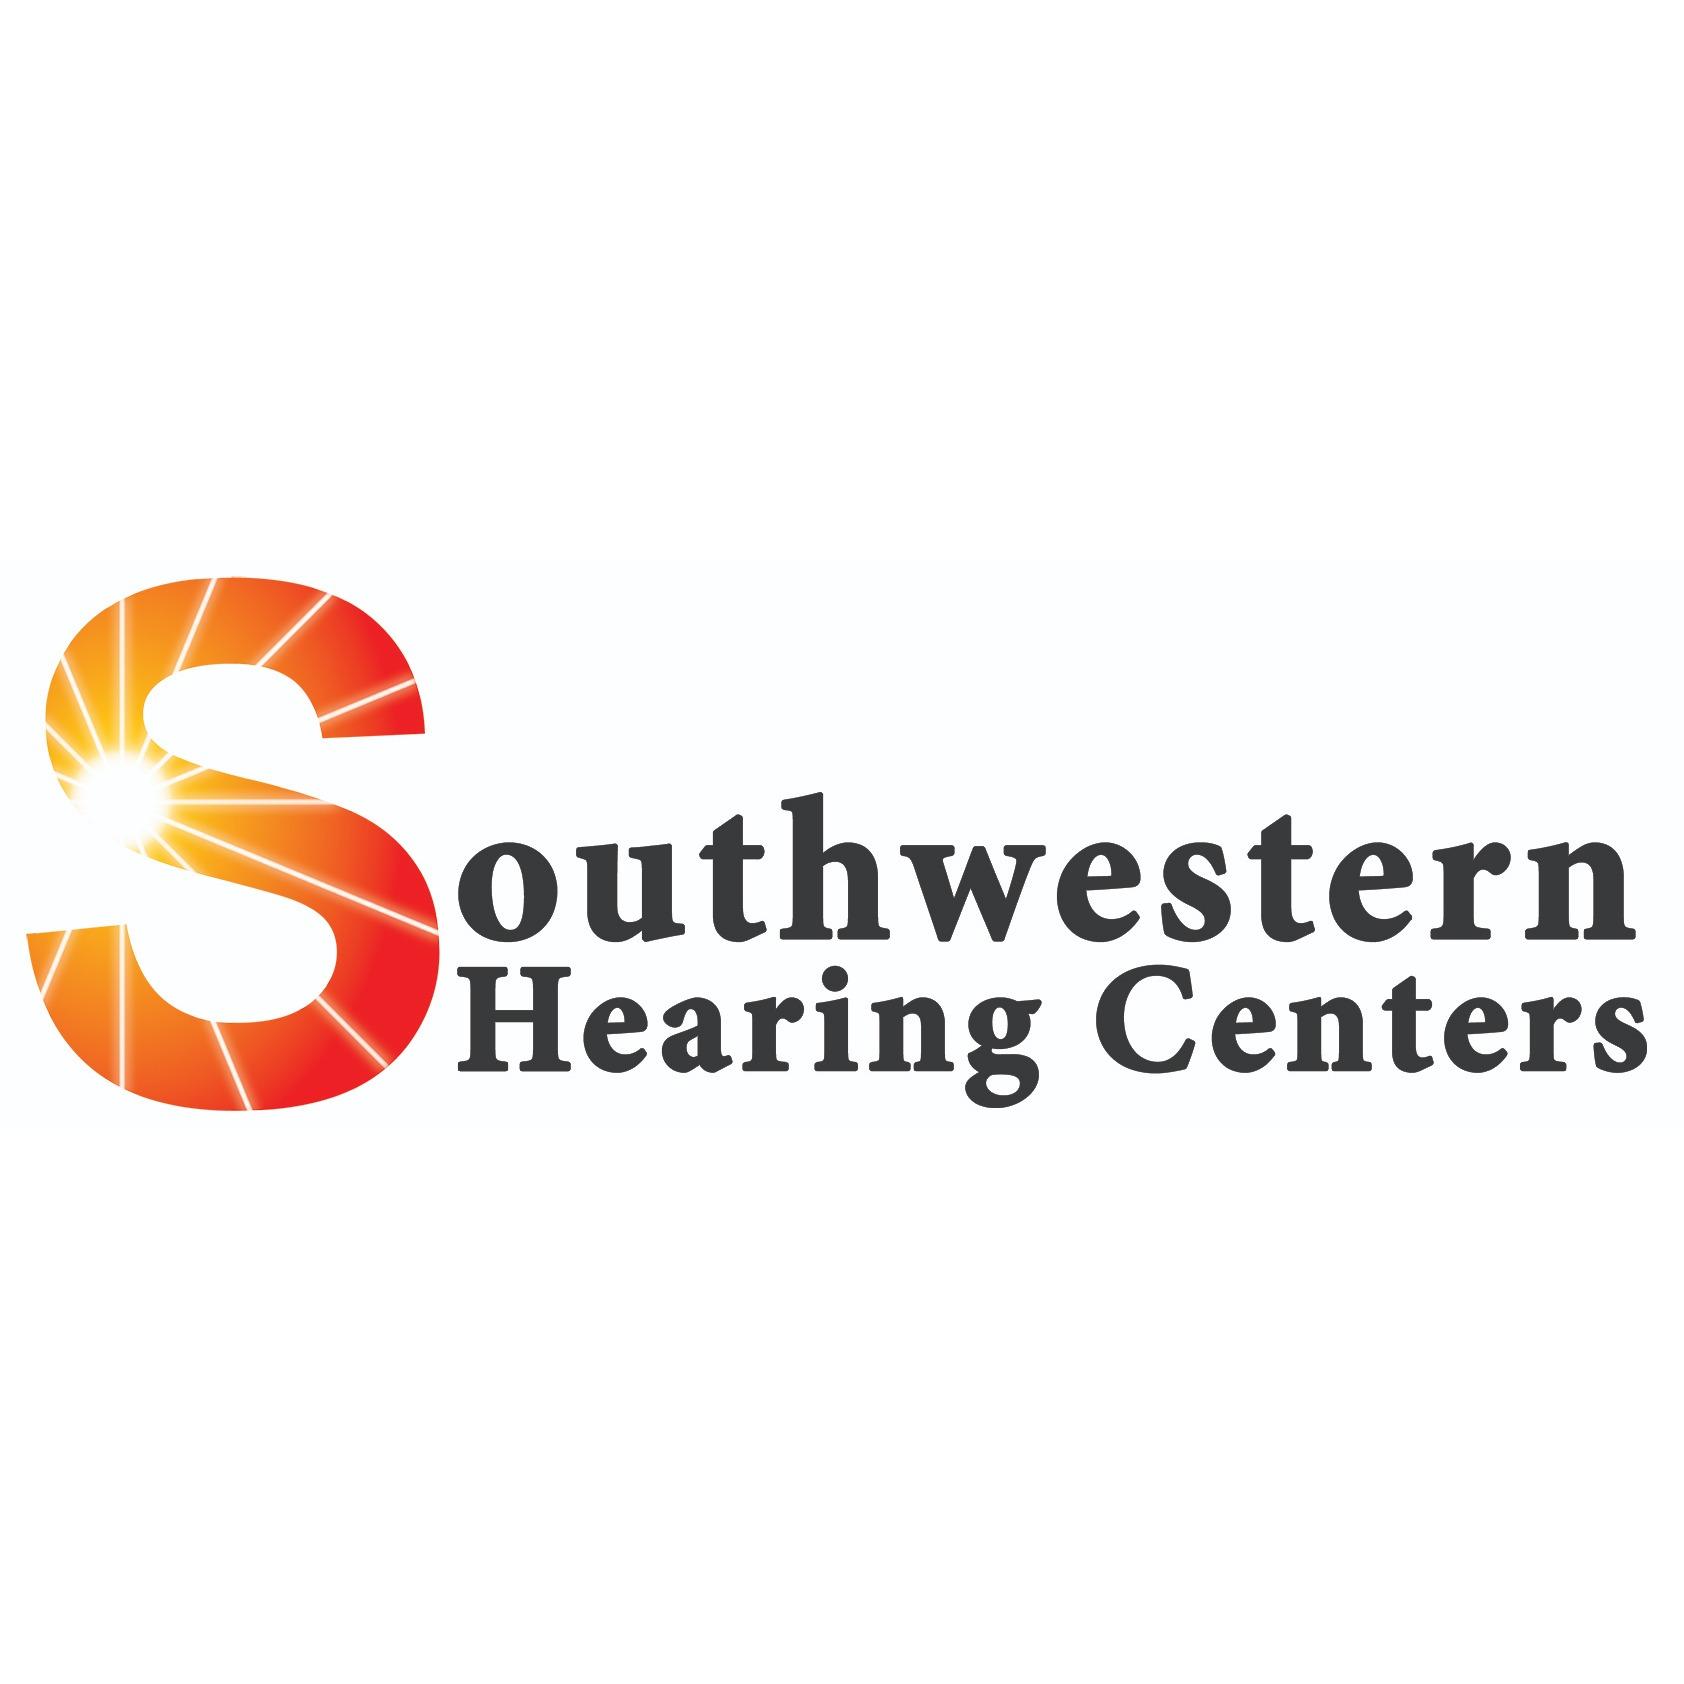 Southwestern Hearing Centers